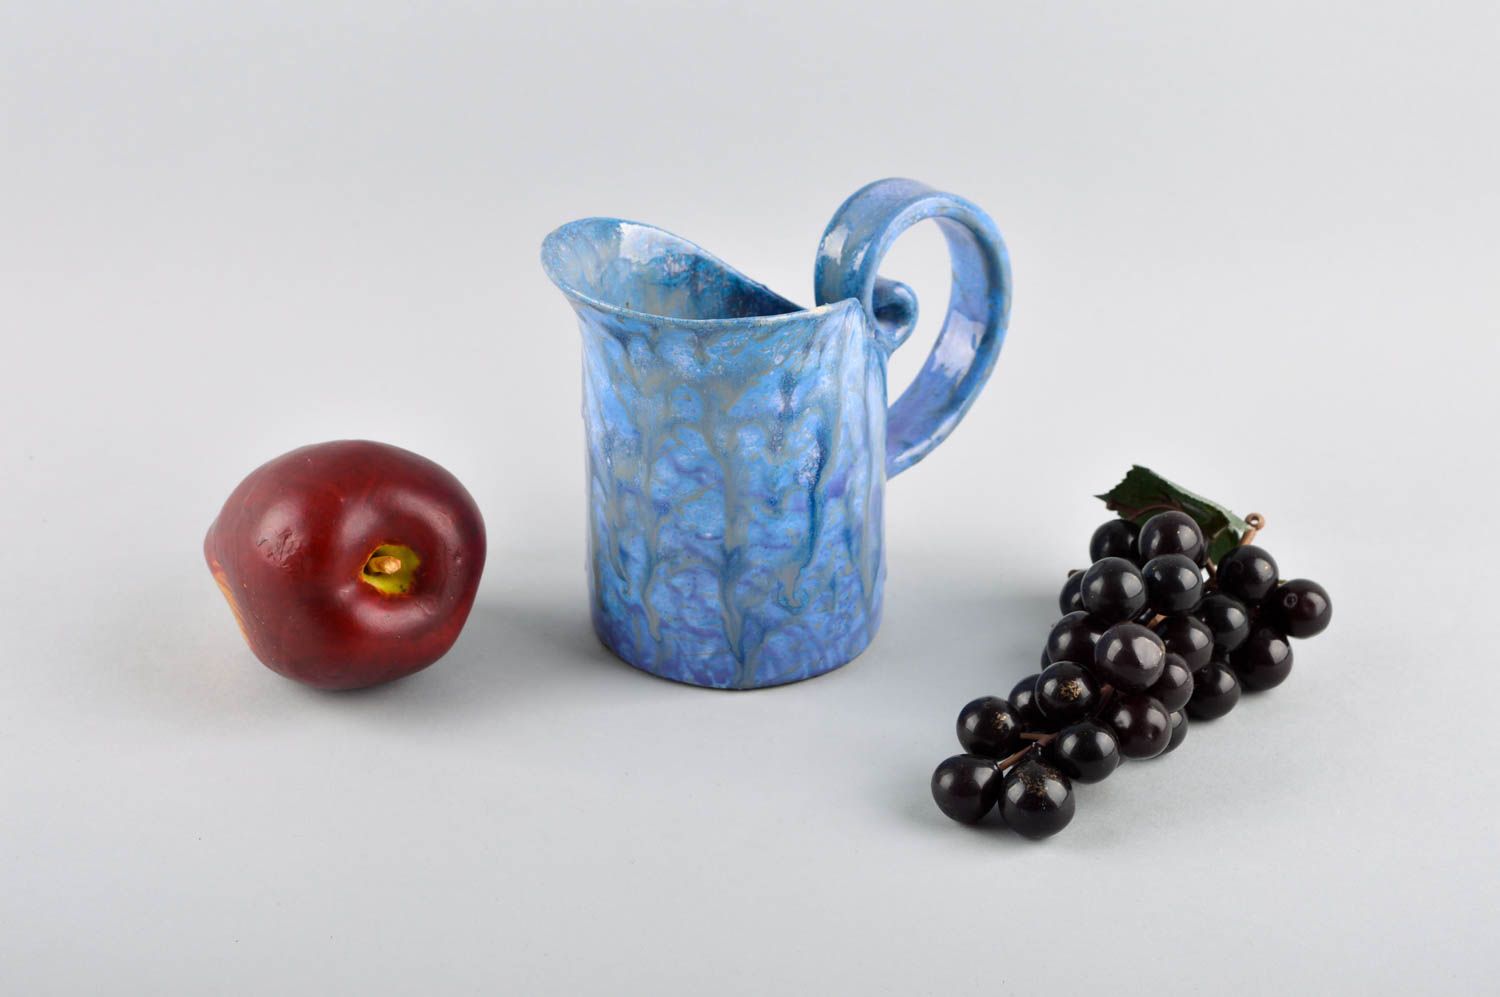 12 oz ceramic water jug in blue color with handle 1,1 lb photo 1